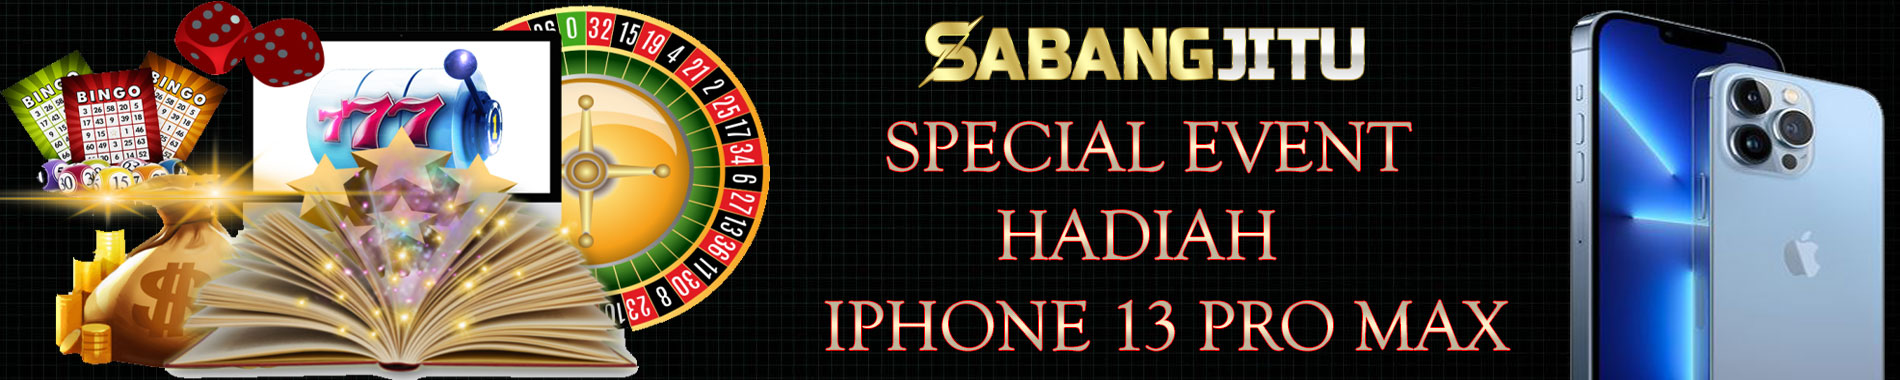 SABANGJITU - Even Turn Over Slot Hadiah Iphone 13 Pro Max